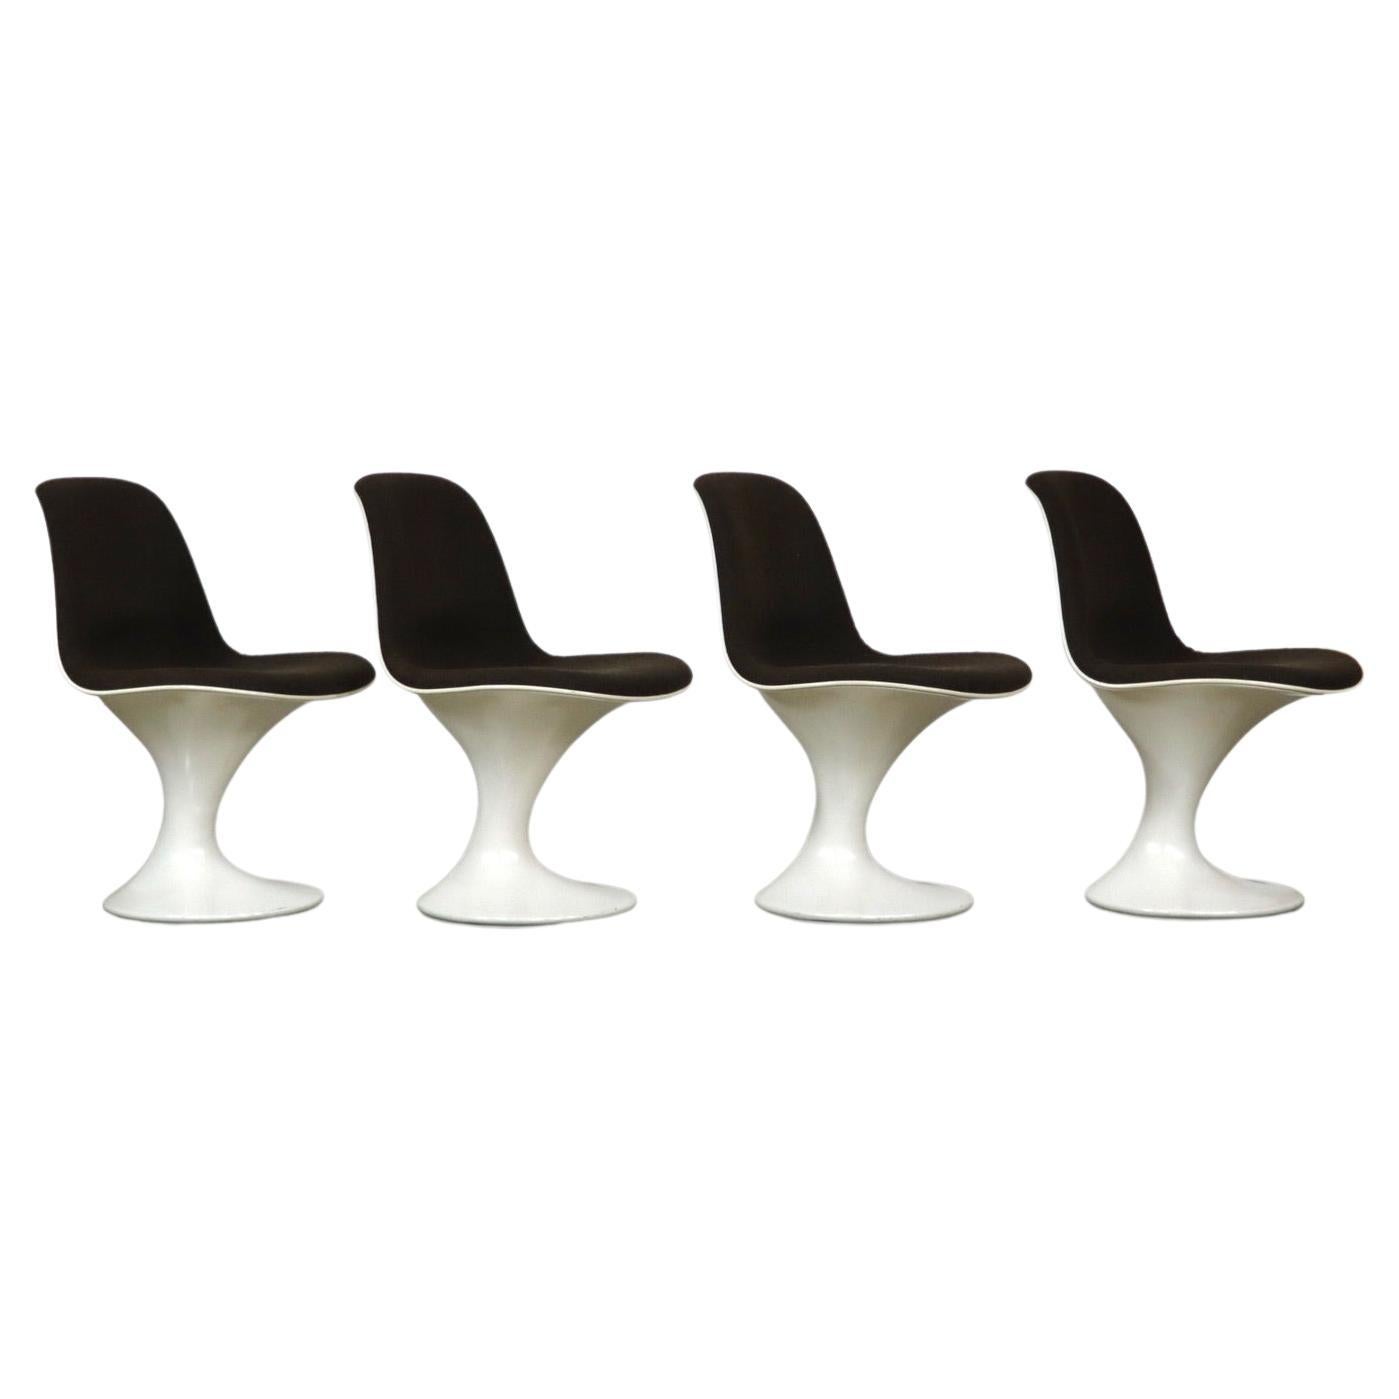 Set of 4 Orbit Chairs by Farner & Grunder for Herman Miller, 1965